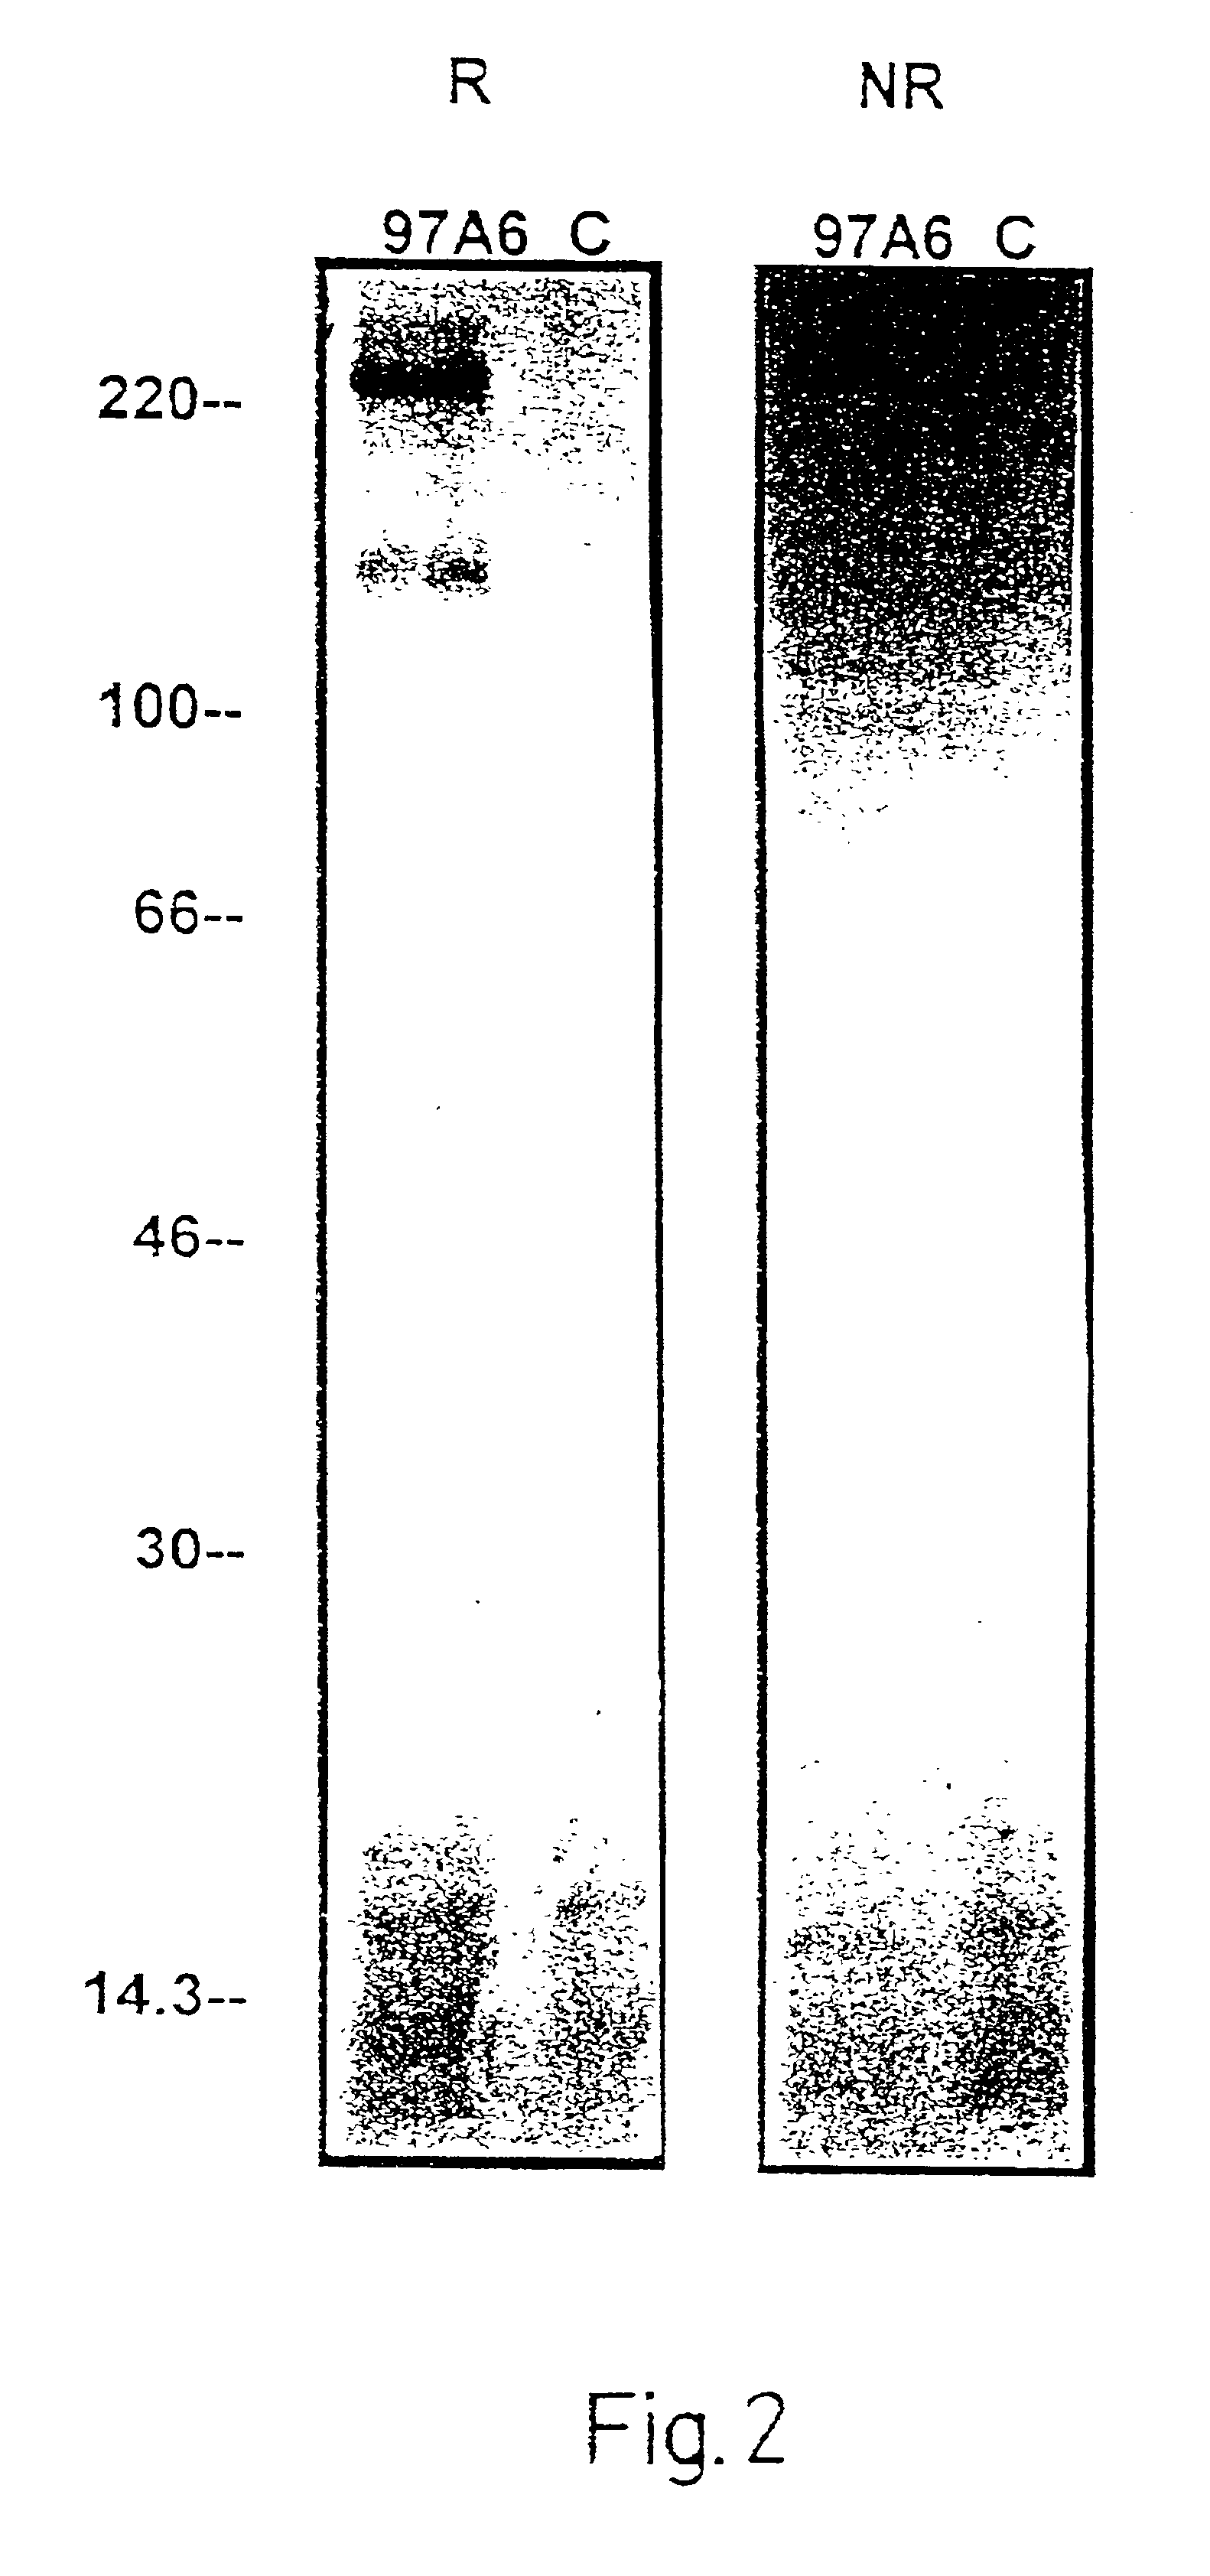 Method for binding basophils and mast cells